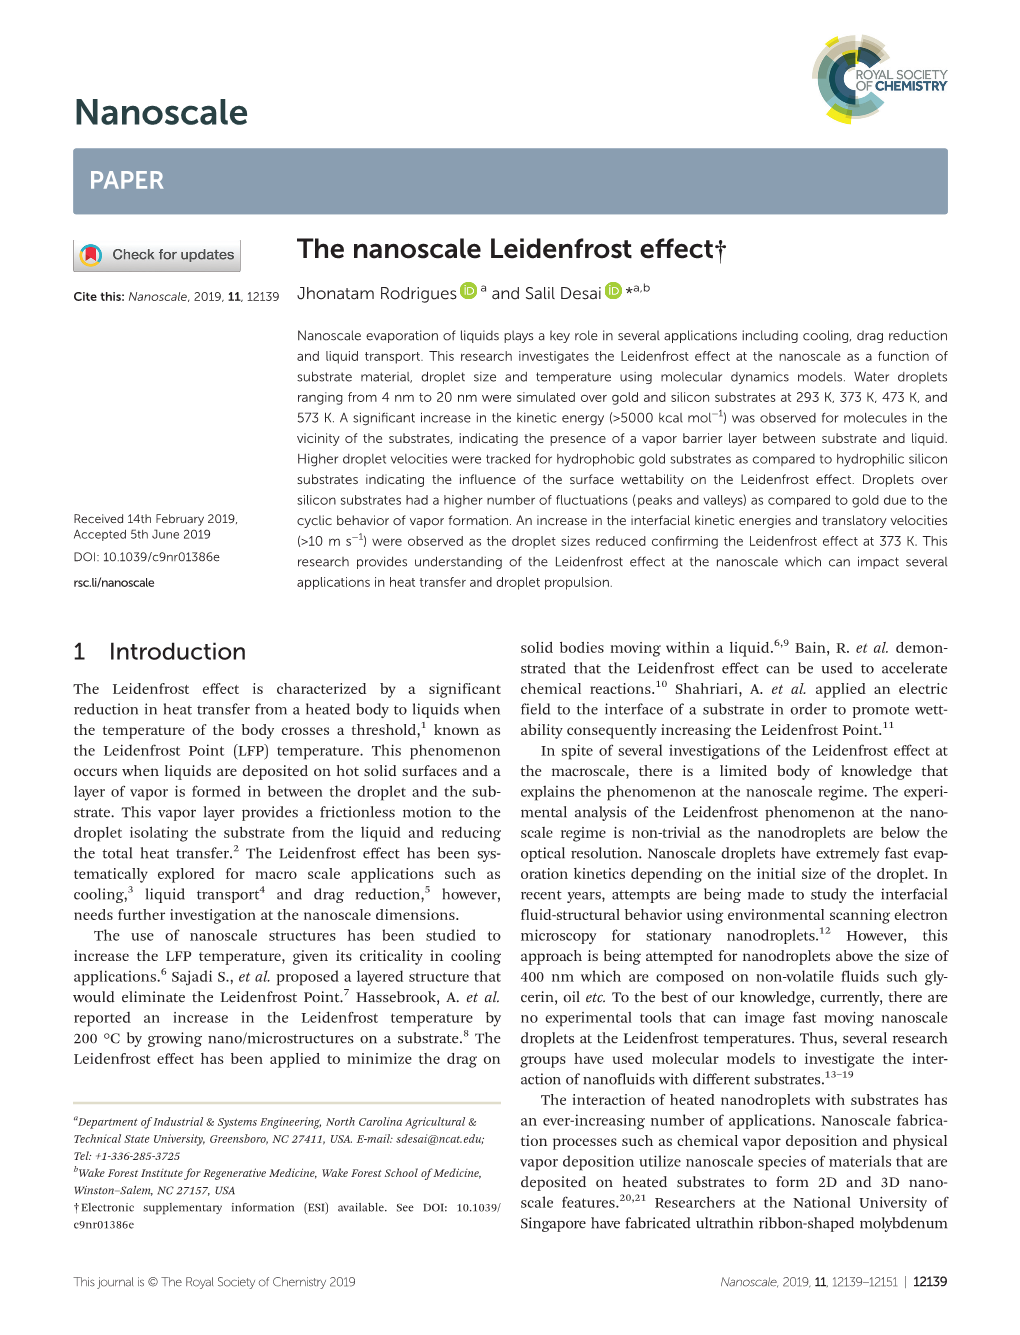 The Nanoscale Leidenfrost Effect